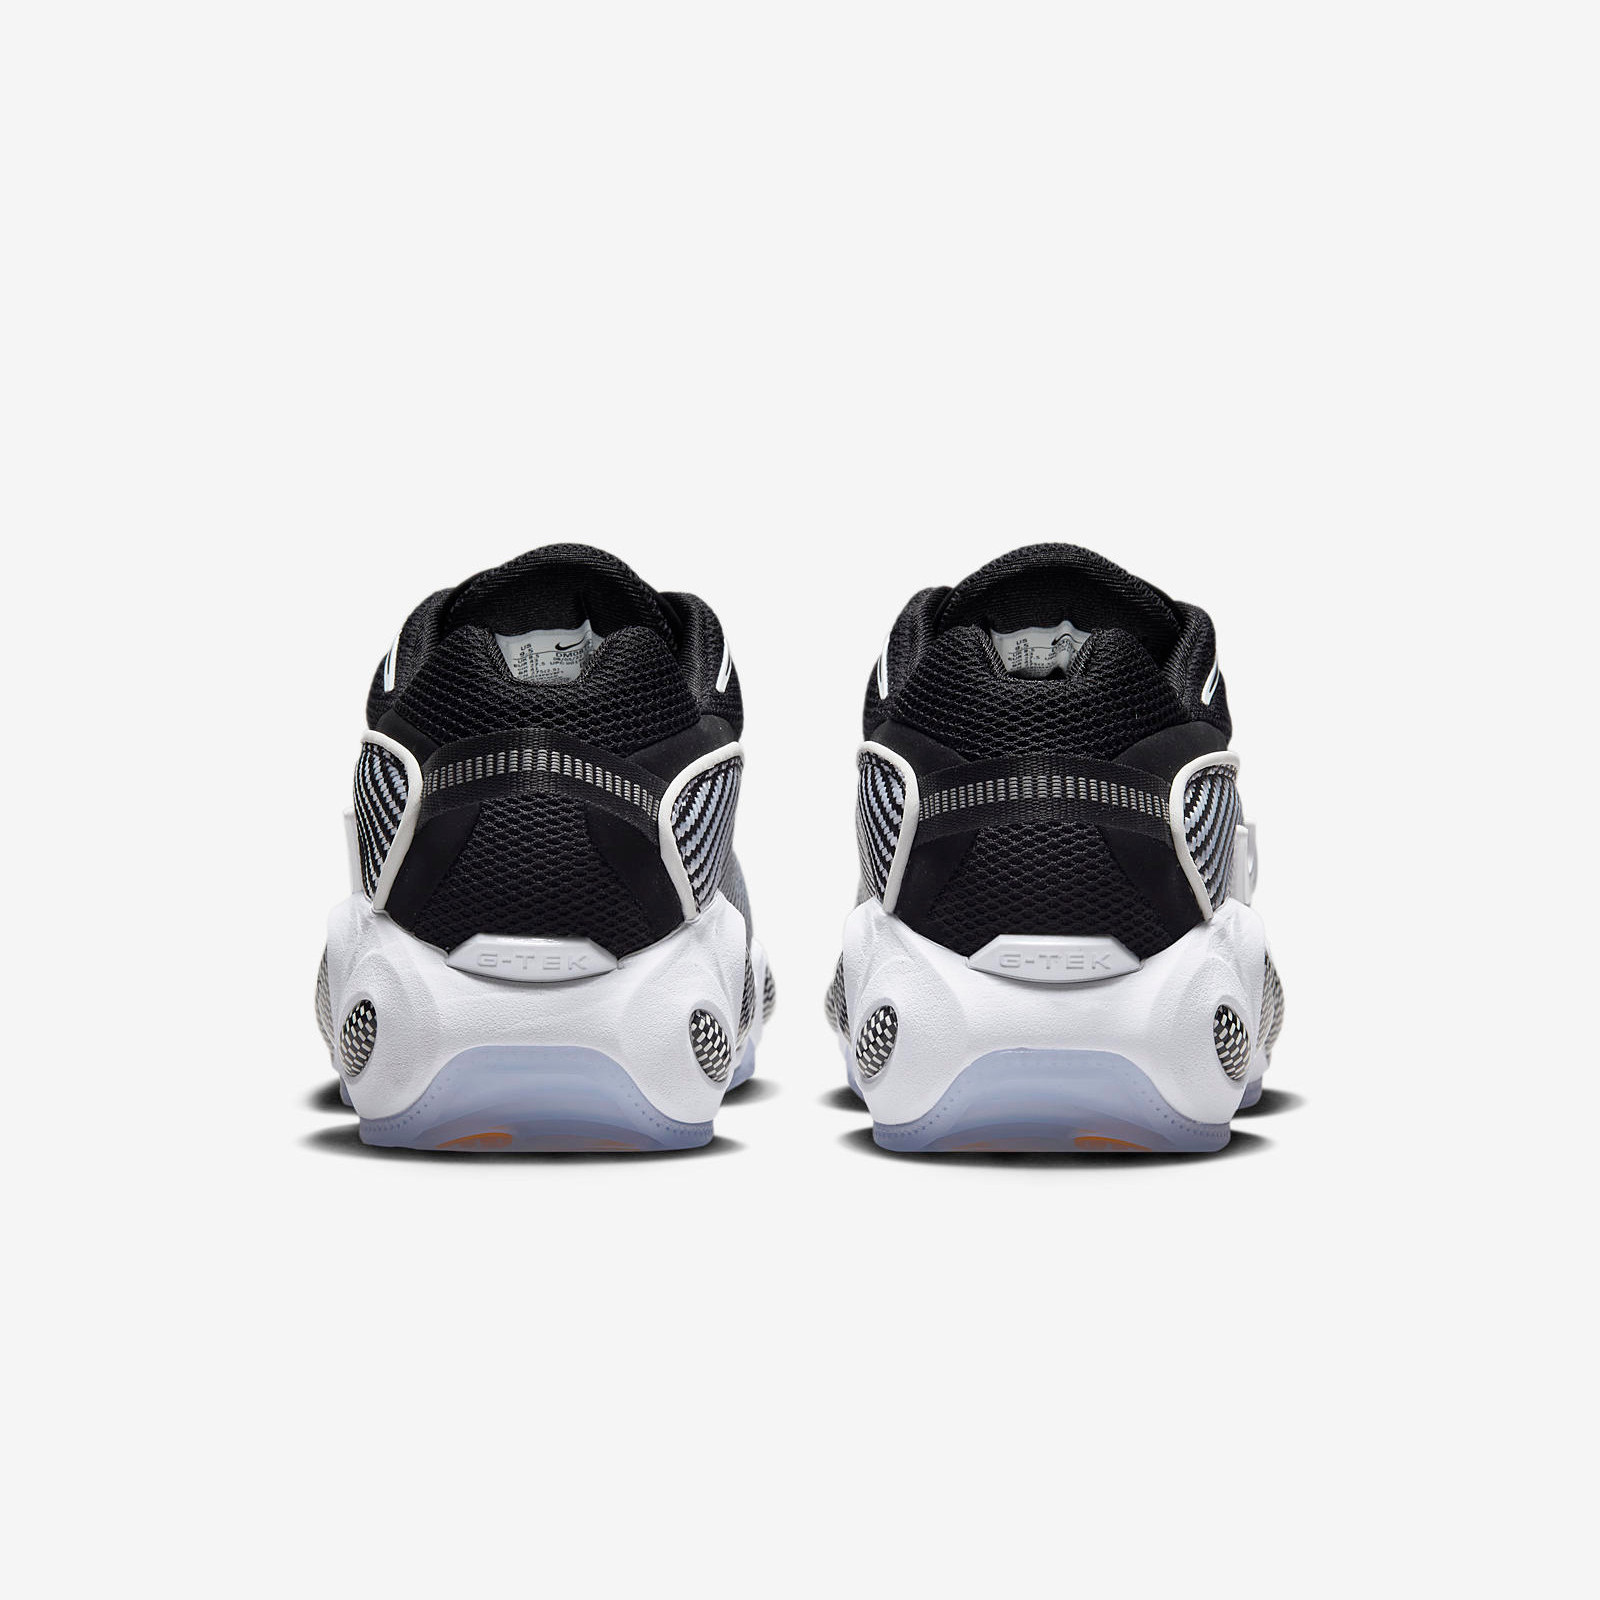 Nike x NOCTA Glide
Black / White